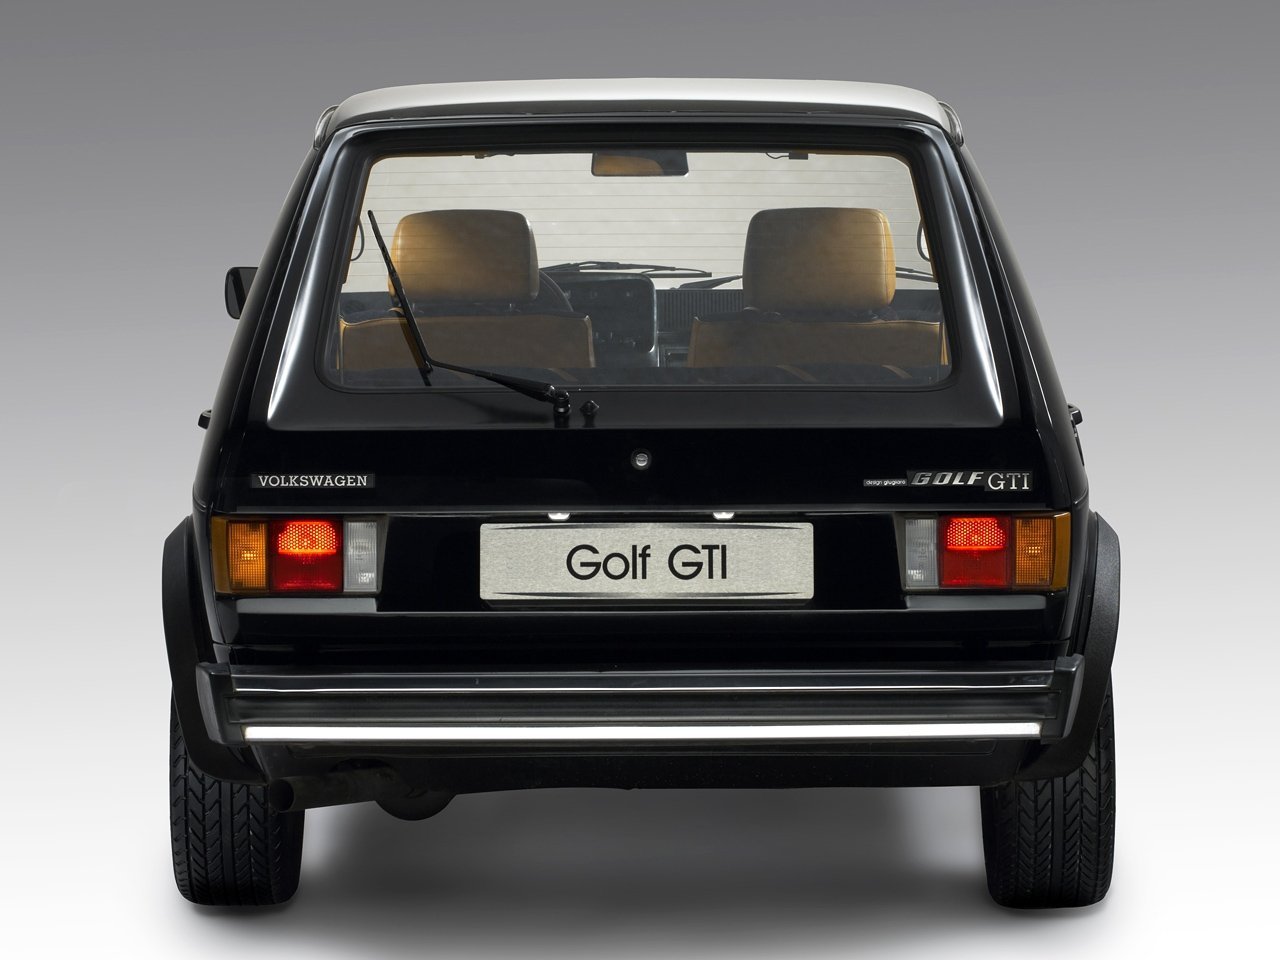 хэтчбек 3 дв. Volkswagen Golf GTI 1976 - 1983г выпуска модификация 1.6 AT (110 л.с.)